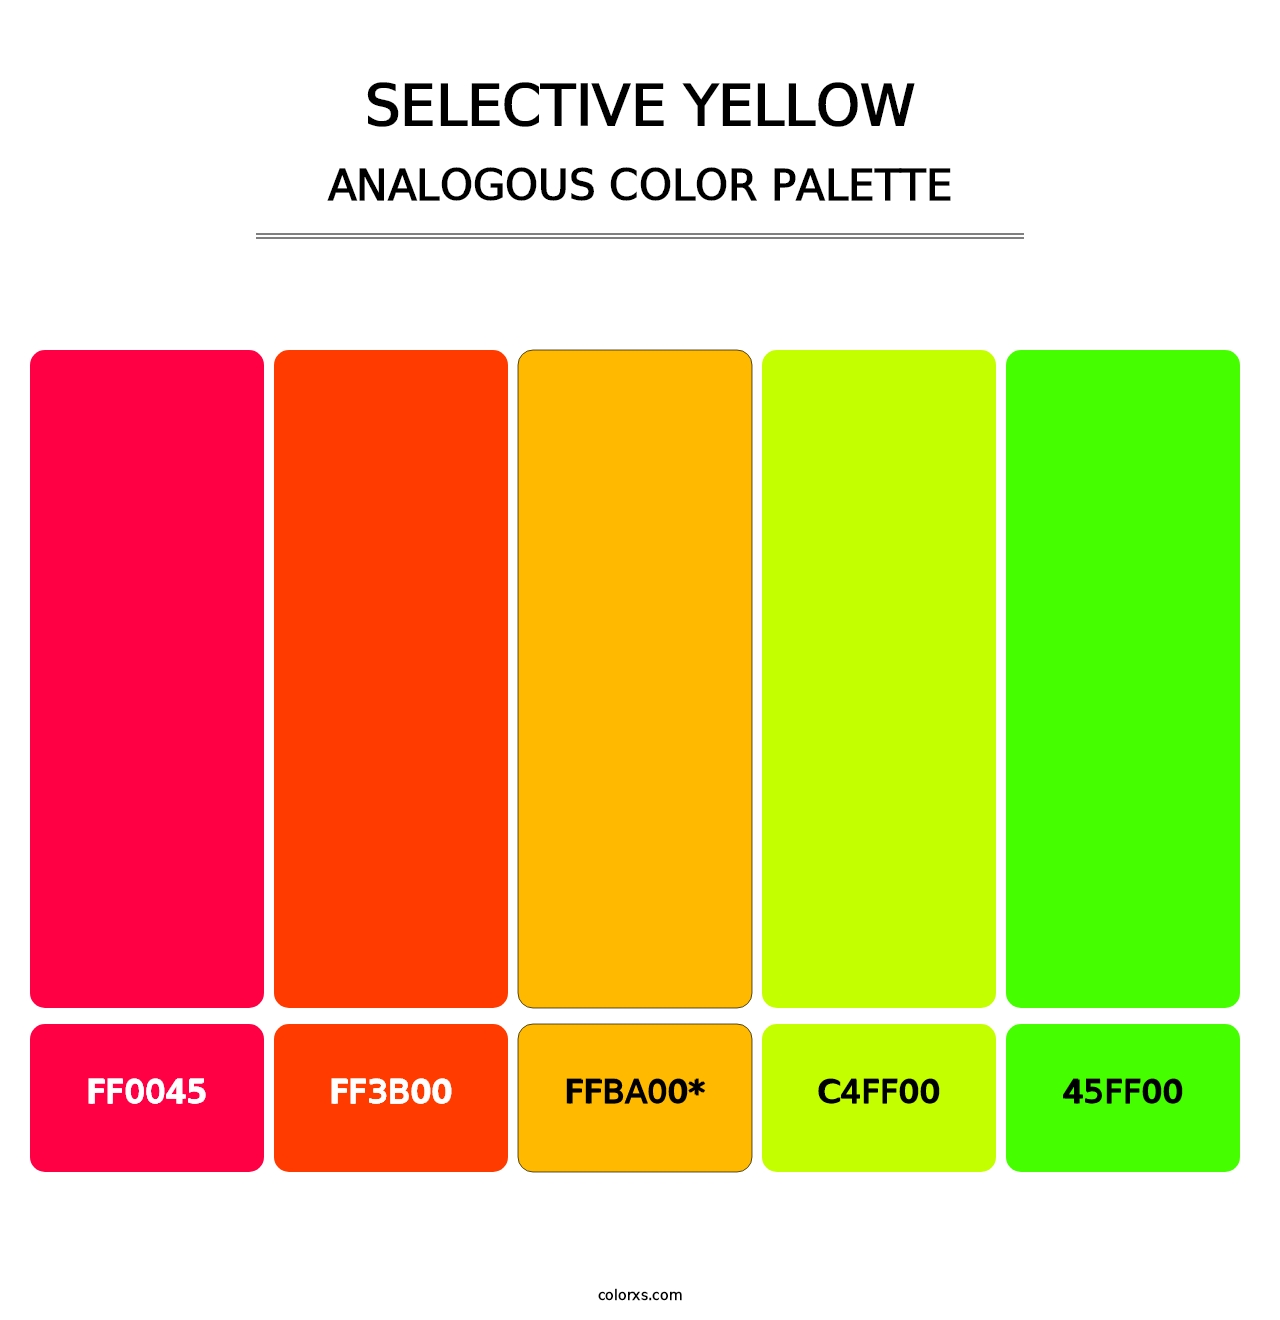 Selective yellow - Analogous Color Palette